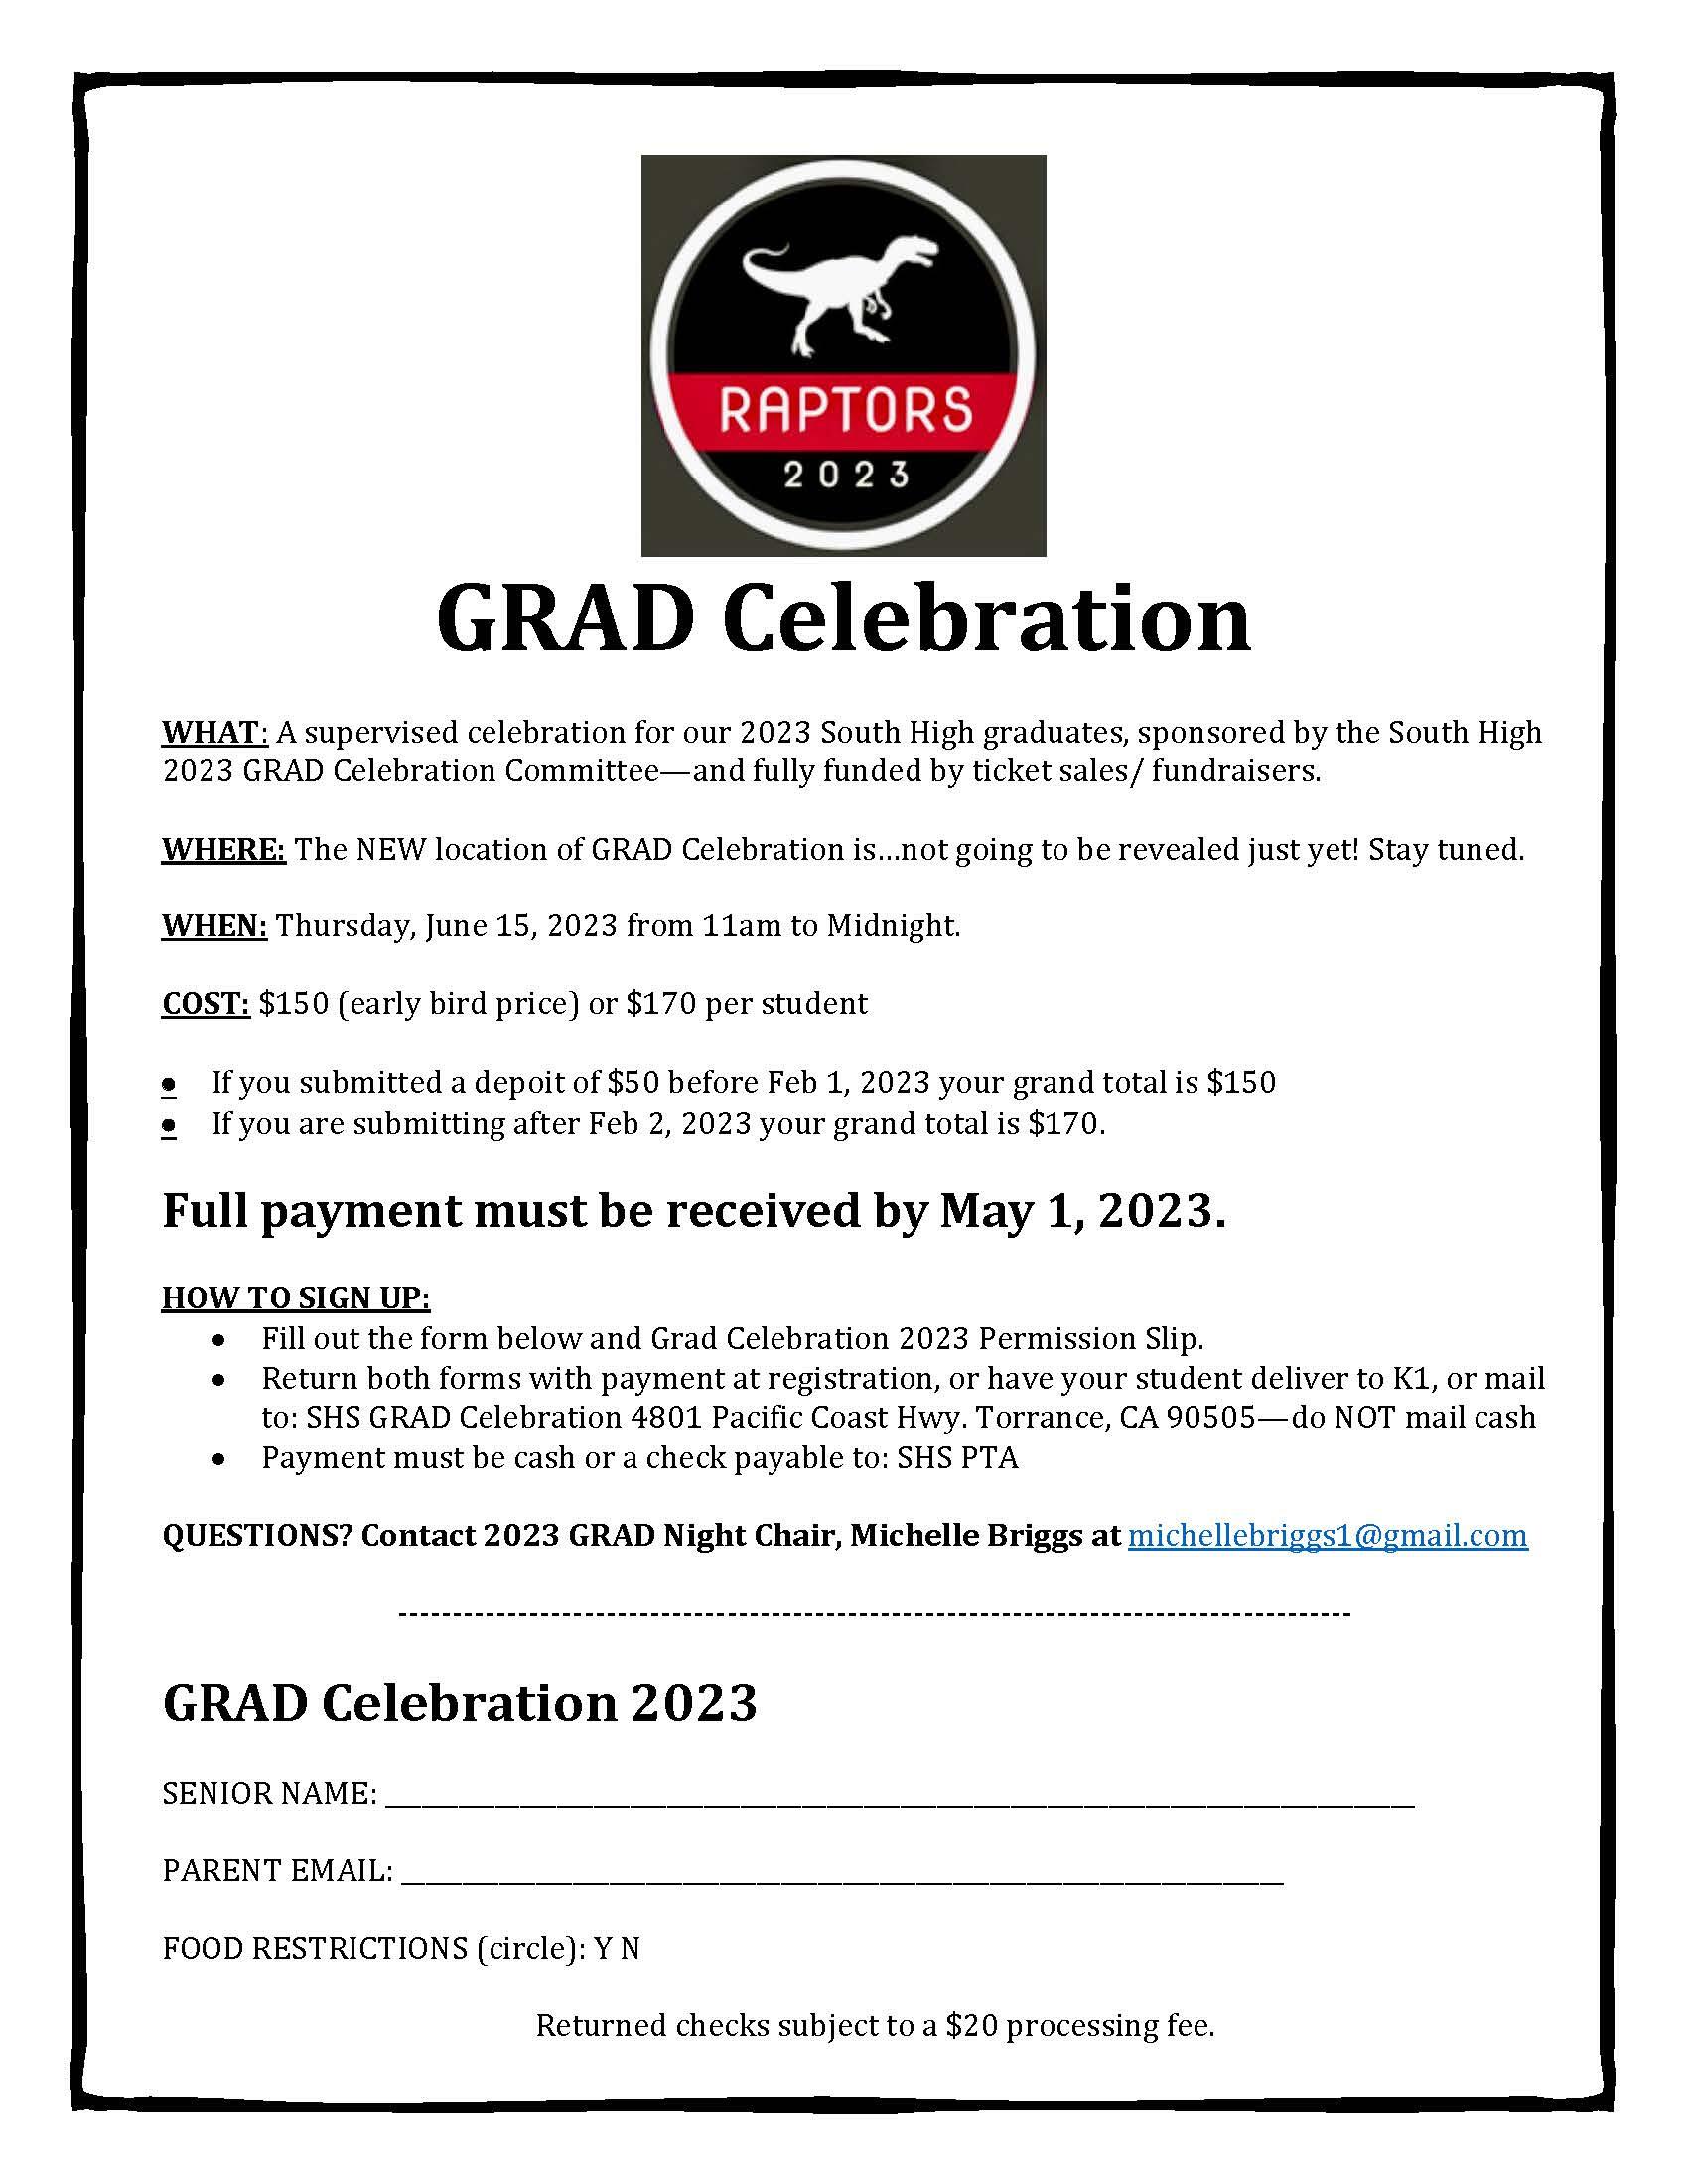 Grad Celebration Permission Slip